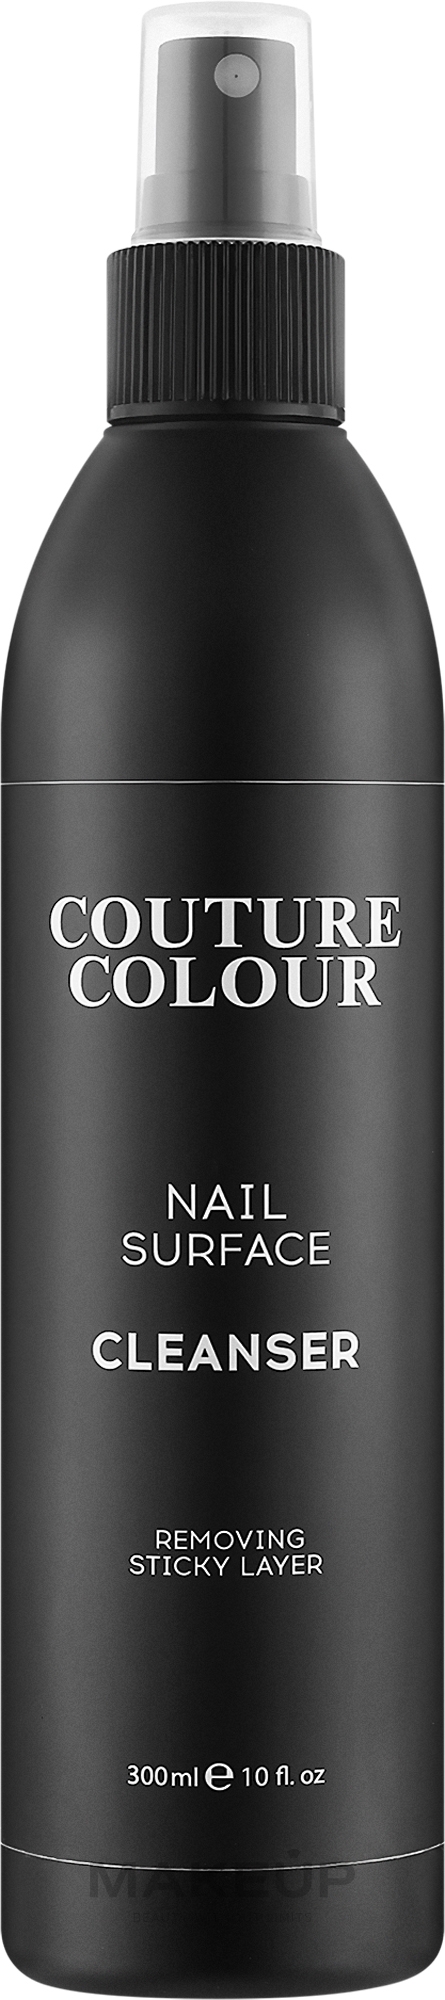 Засіб для видалення липкого шару - Couture Colour Nail Surface Cleanser Remover Sticky Layer — фото 300ml